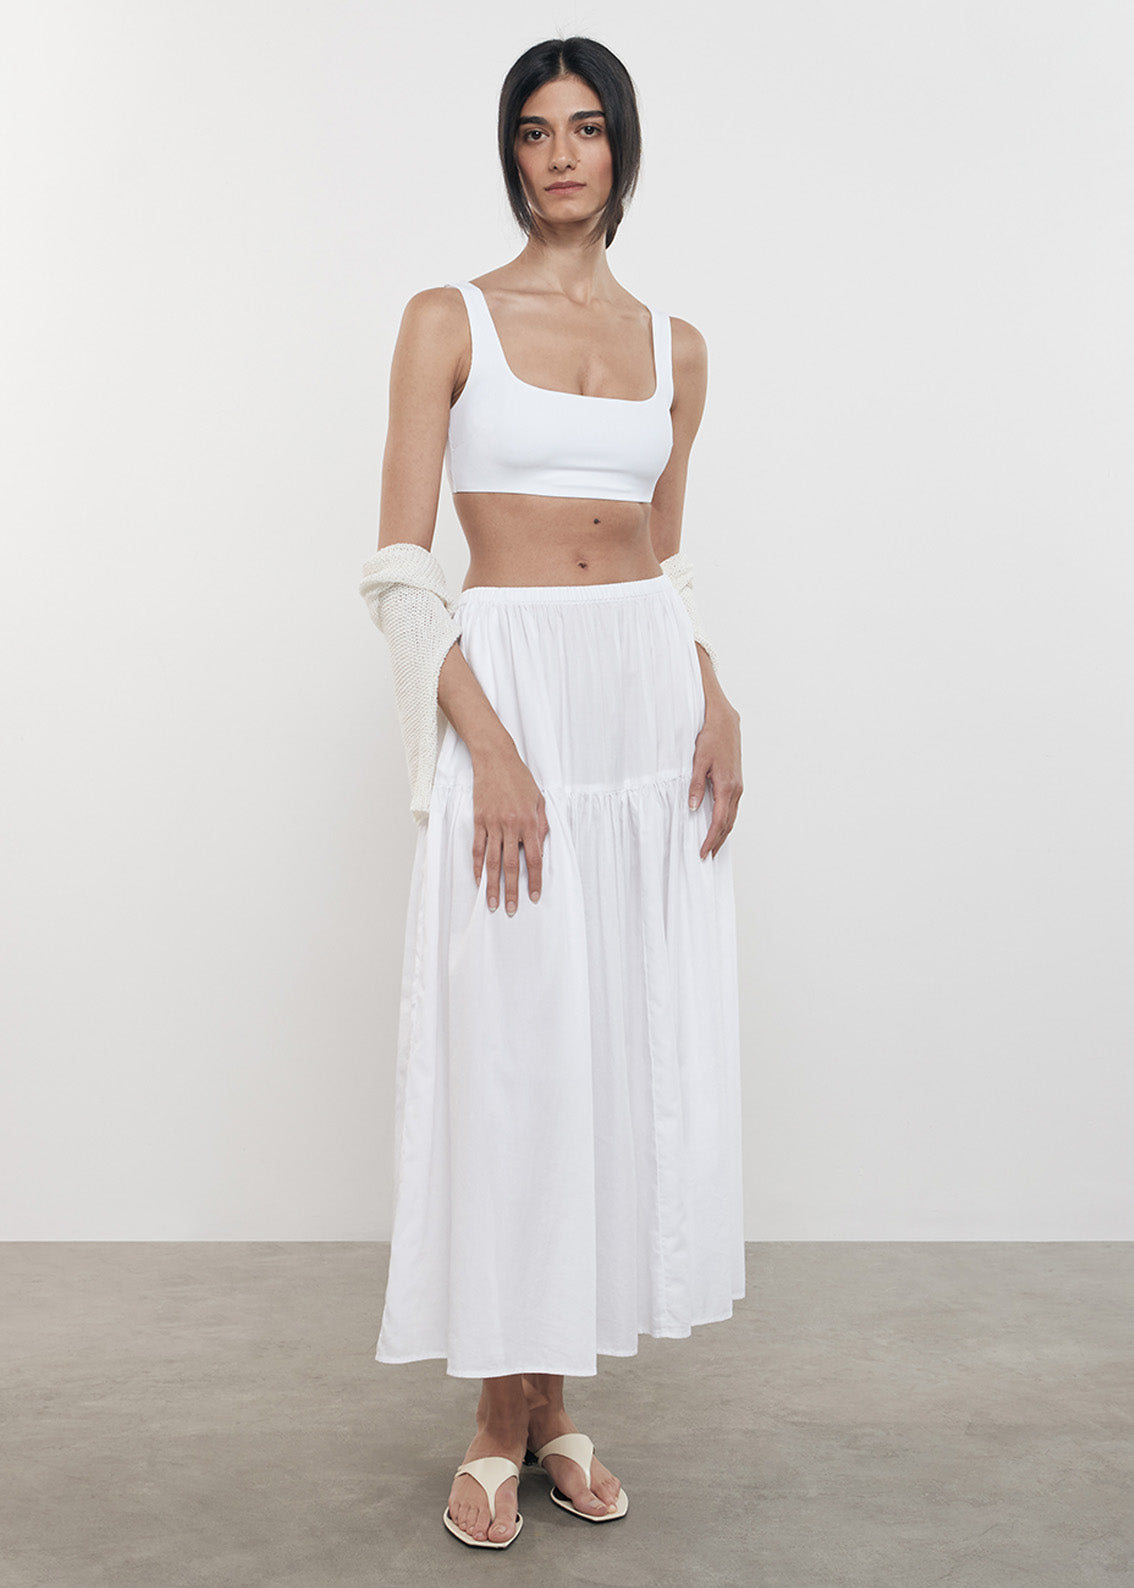 tiered maxi skirt - white